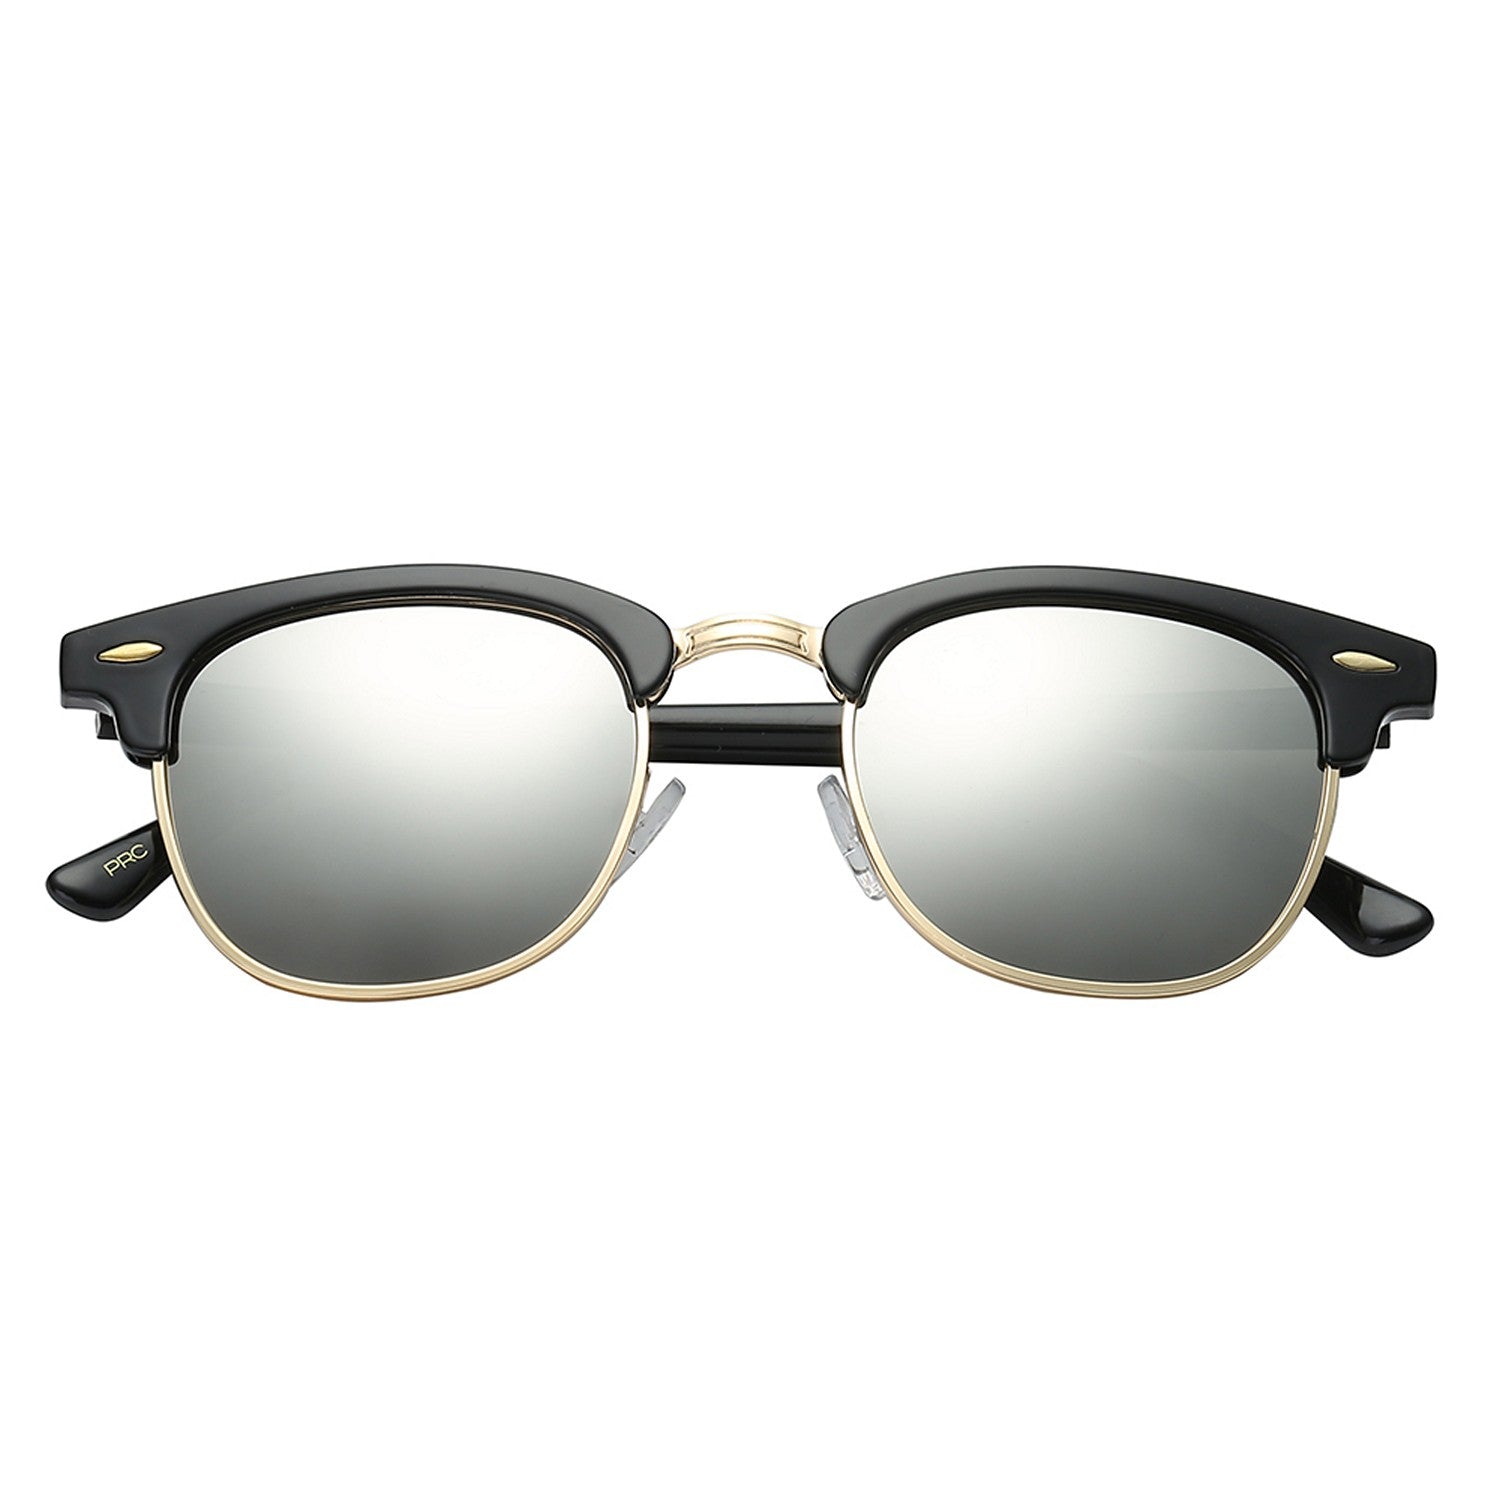 Polarspex Polarized Malcom Half Frame Semi-Rimless Style Unisex Sunglasses with Gloss Black Frames and Ice Tech Lenses